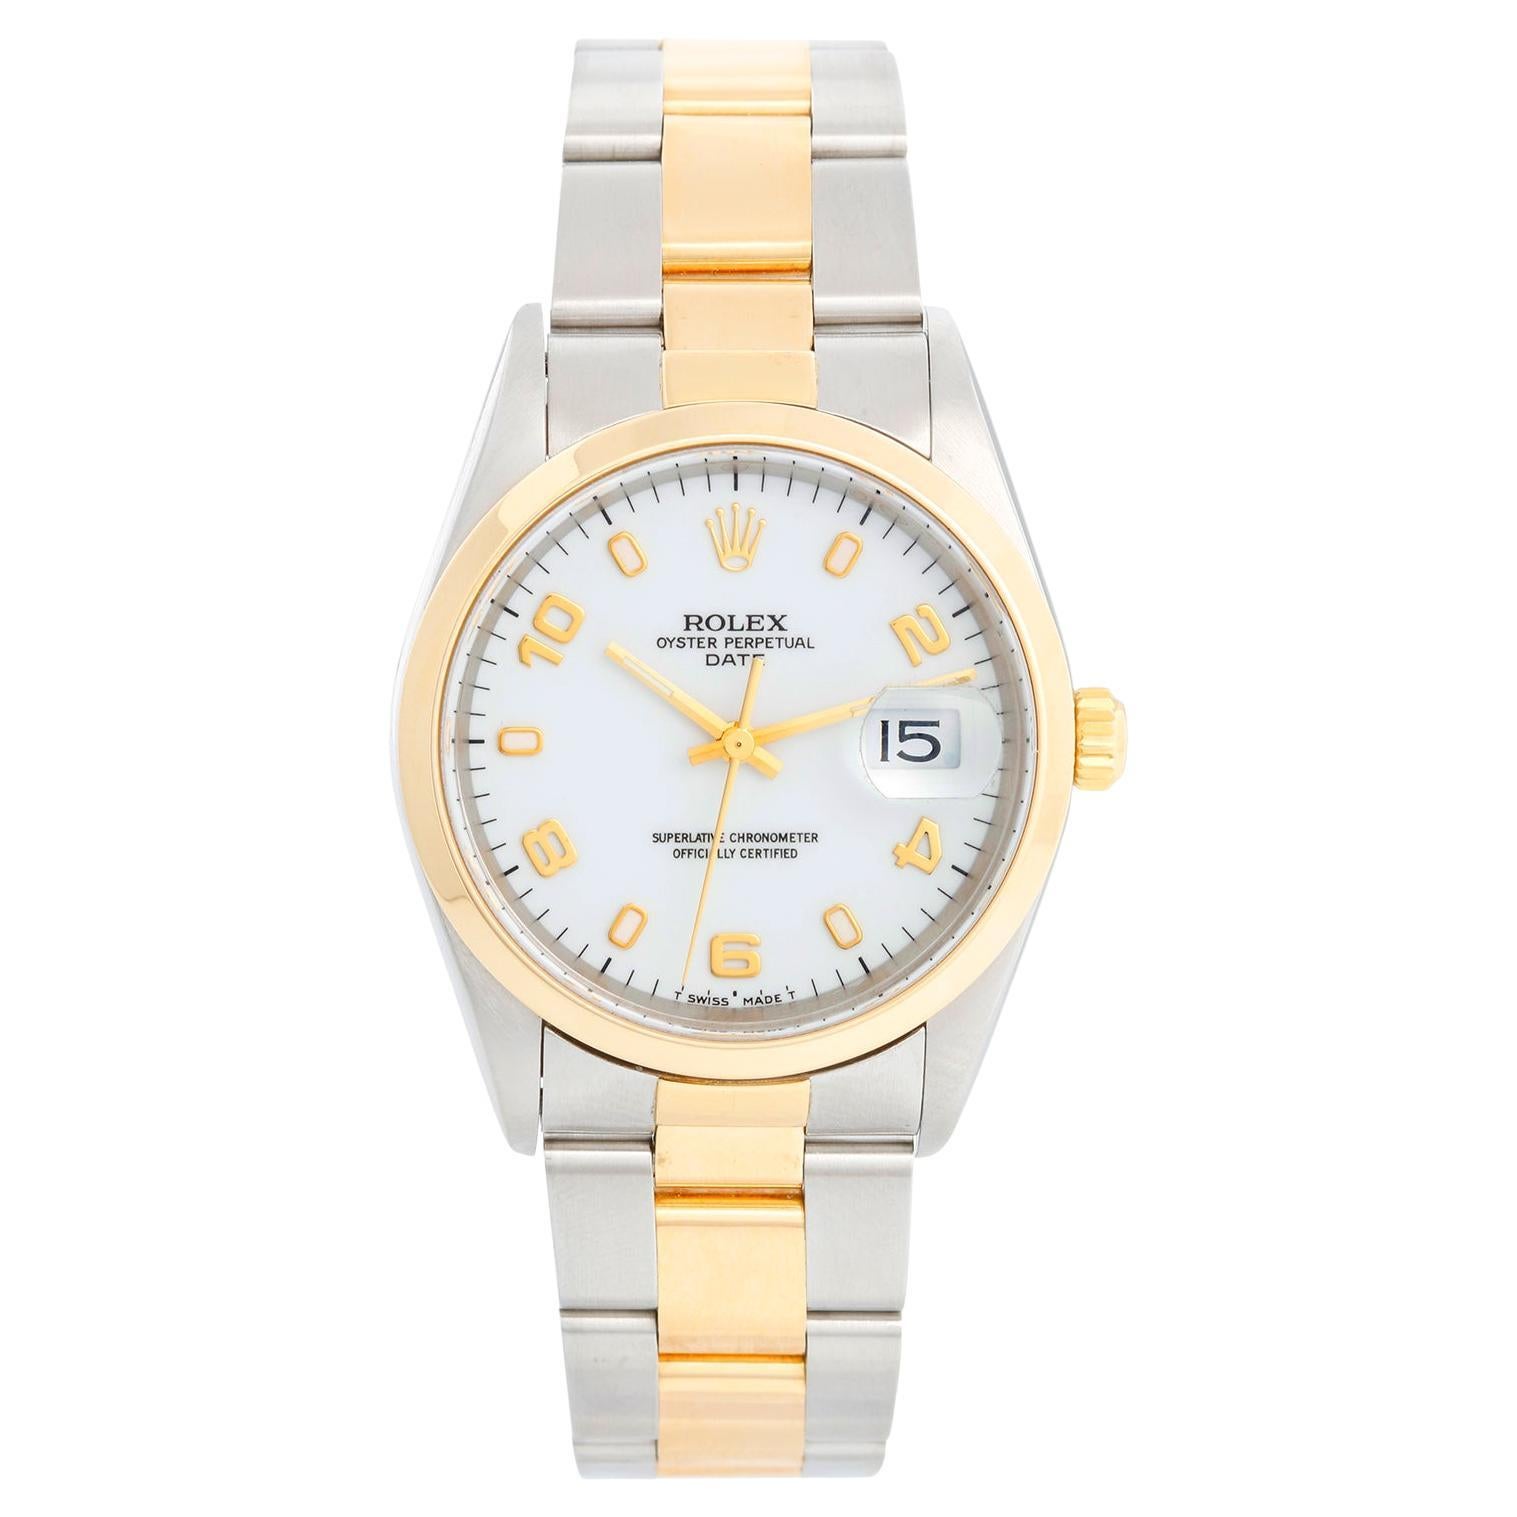 Rolex Date Men's 2-Tone Steel & Gold Watch 15203